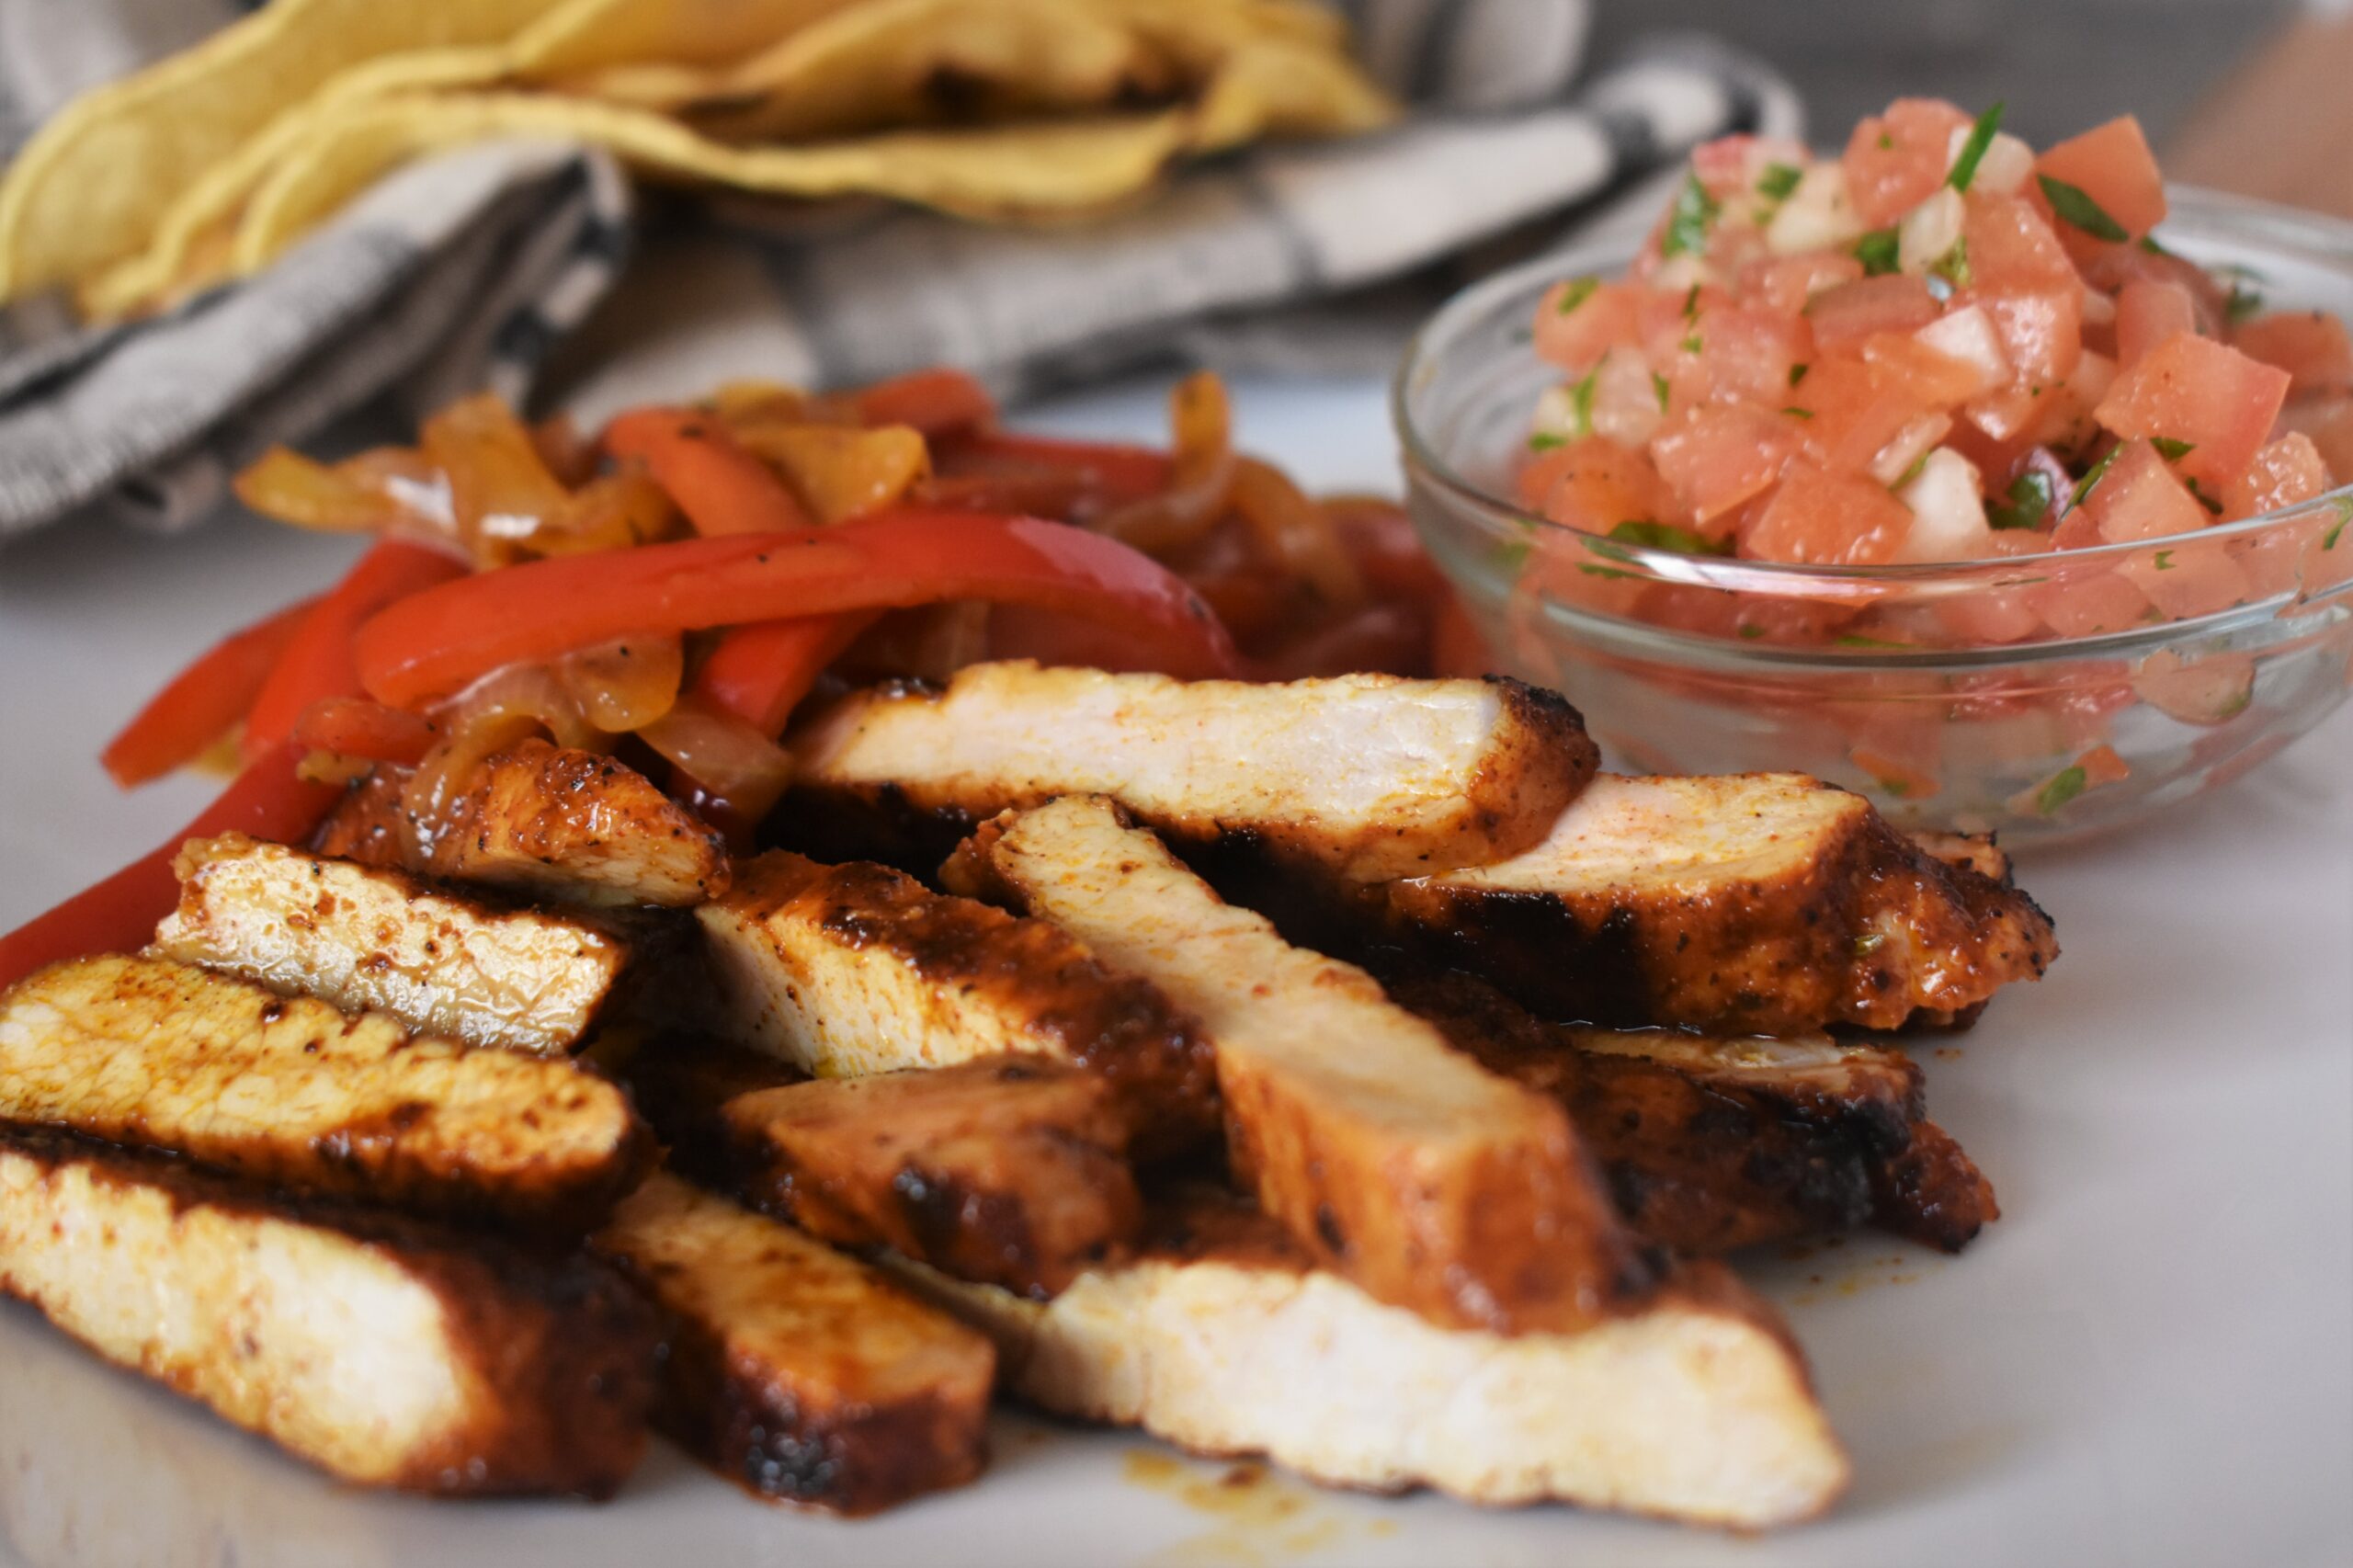 a plate of fajita style chipotle pork chops next to a side cup of pico de gallio